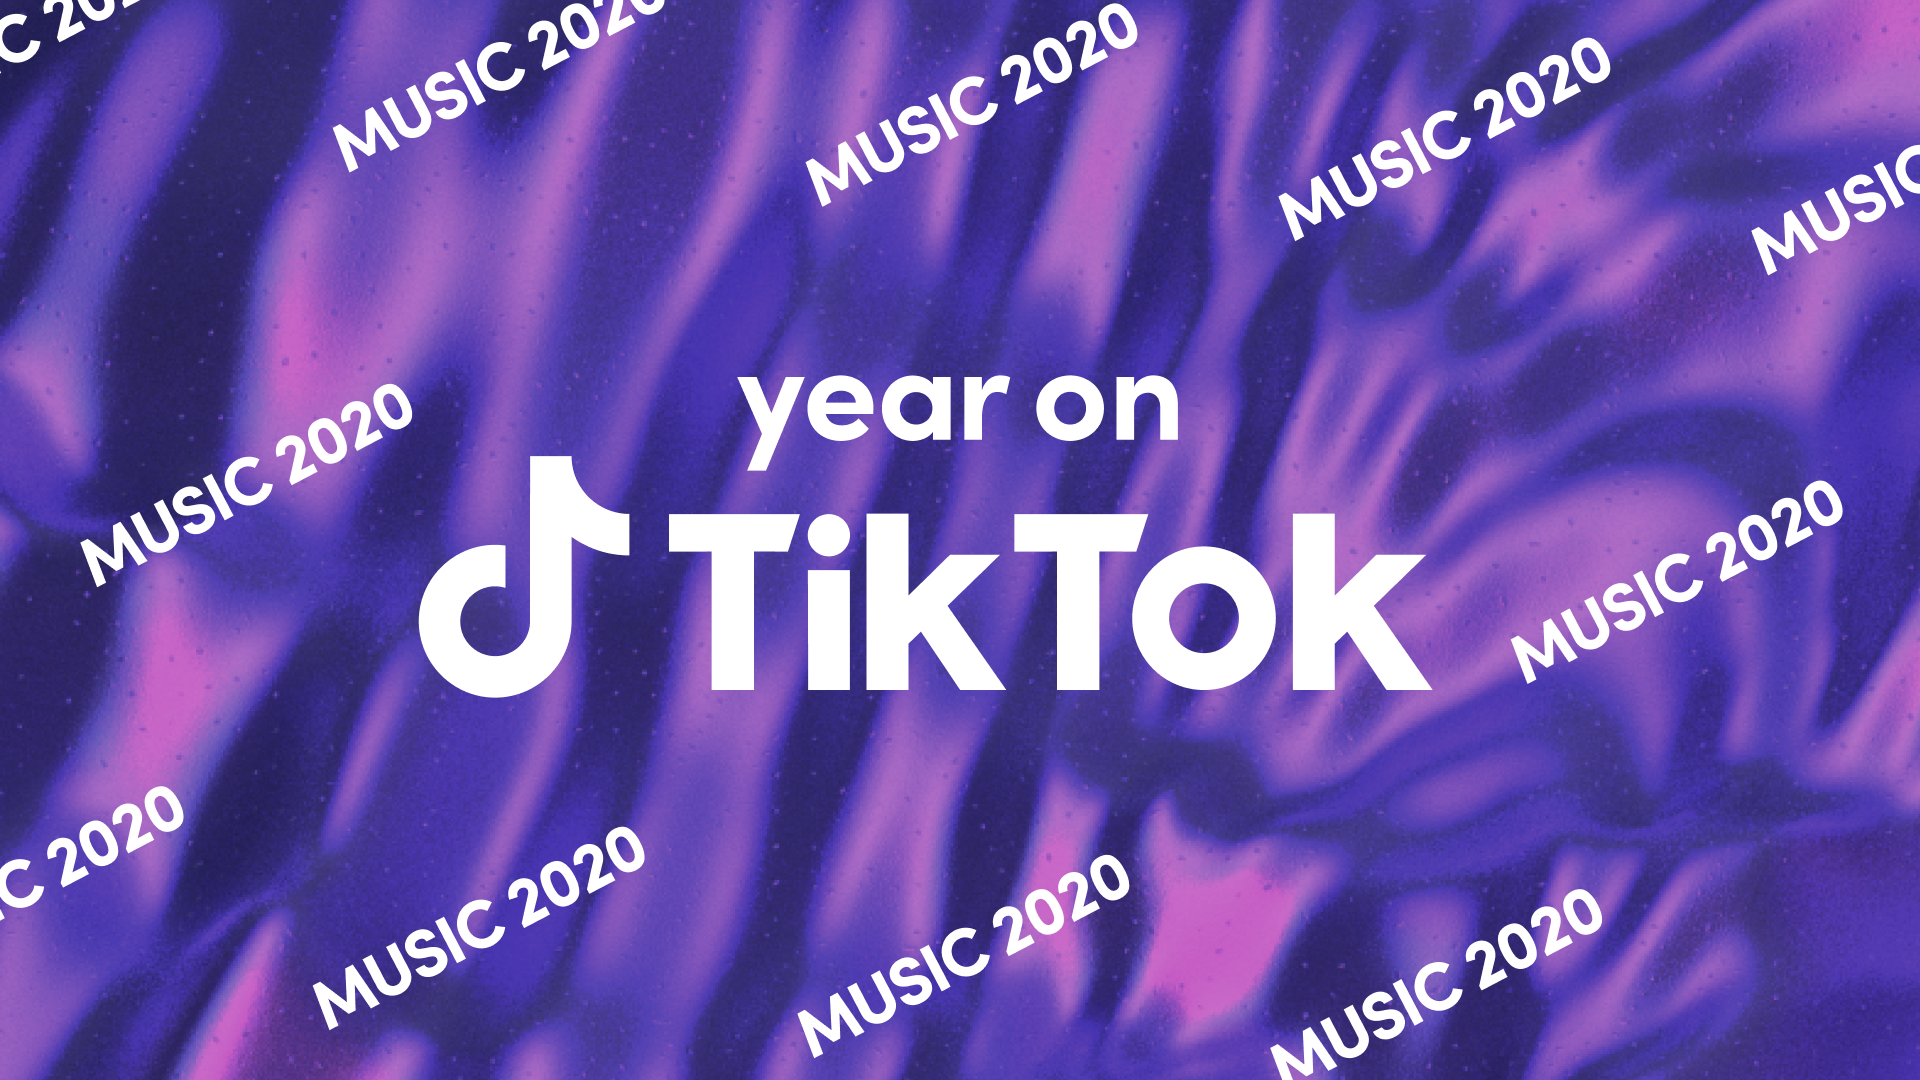 Year on TikTok: Music 2020